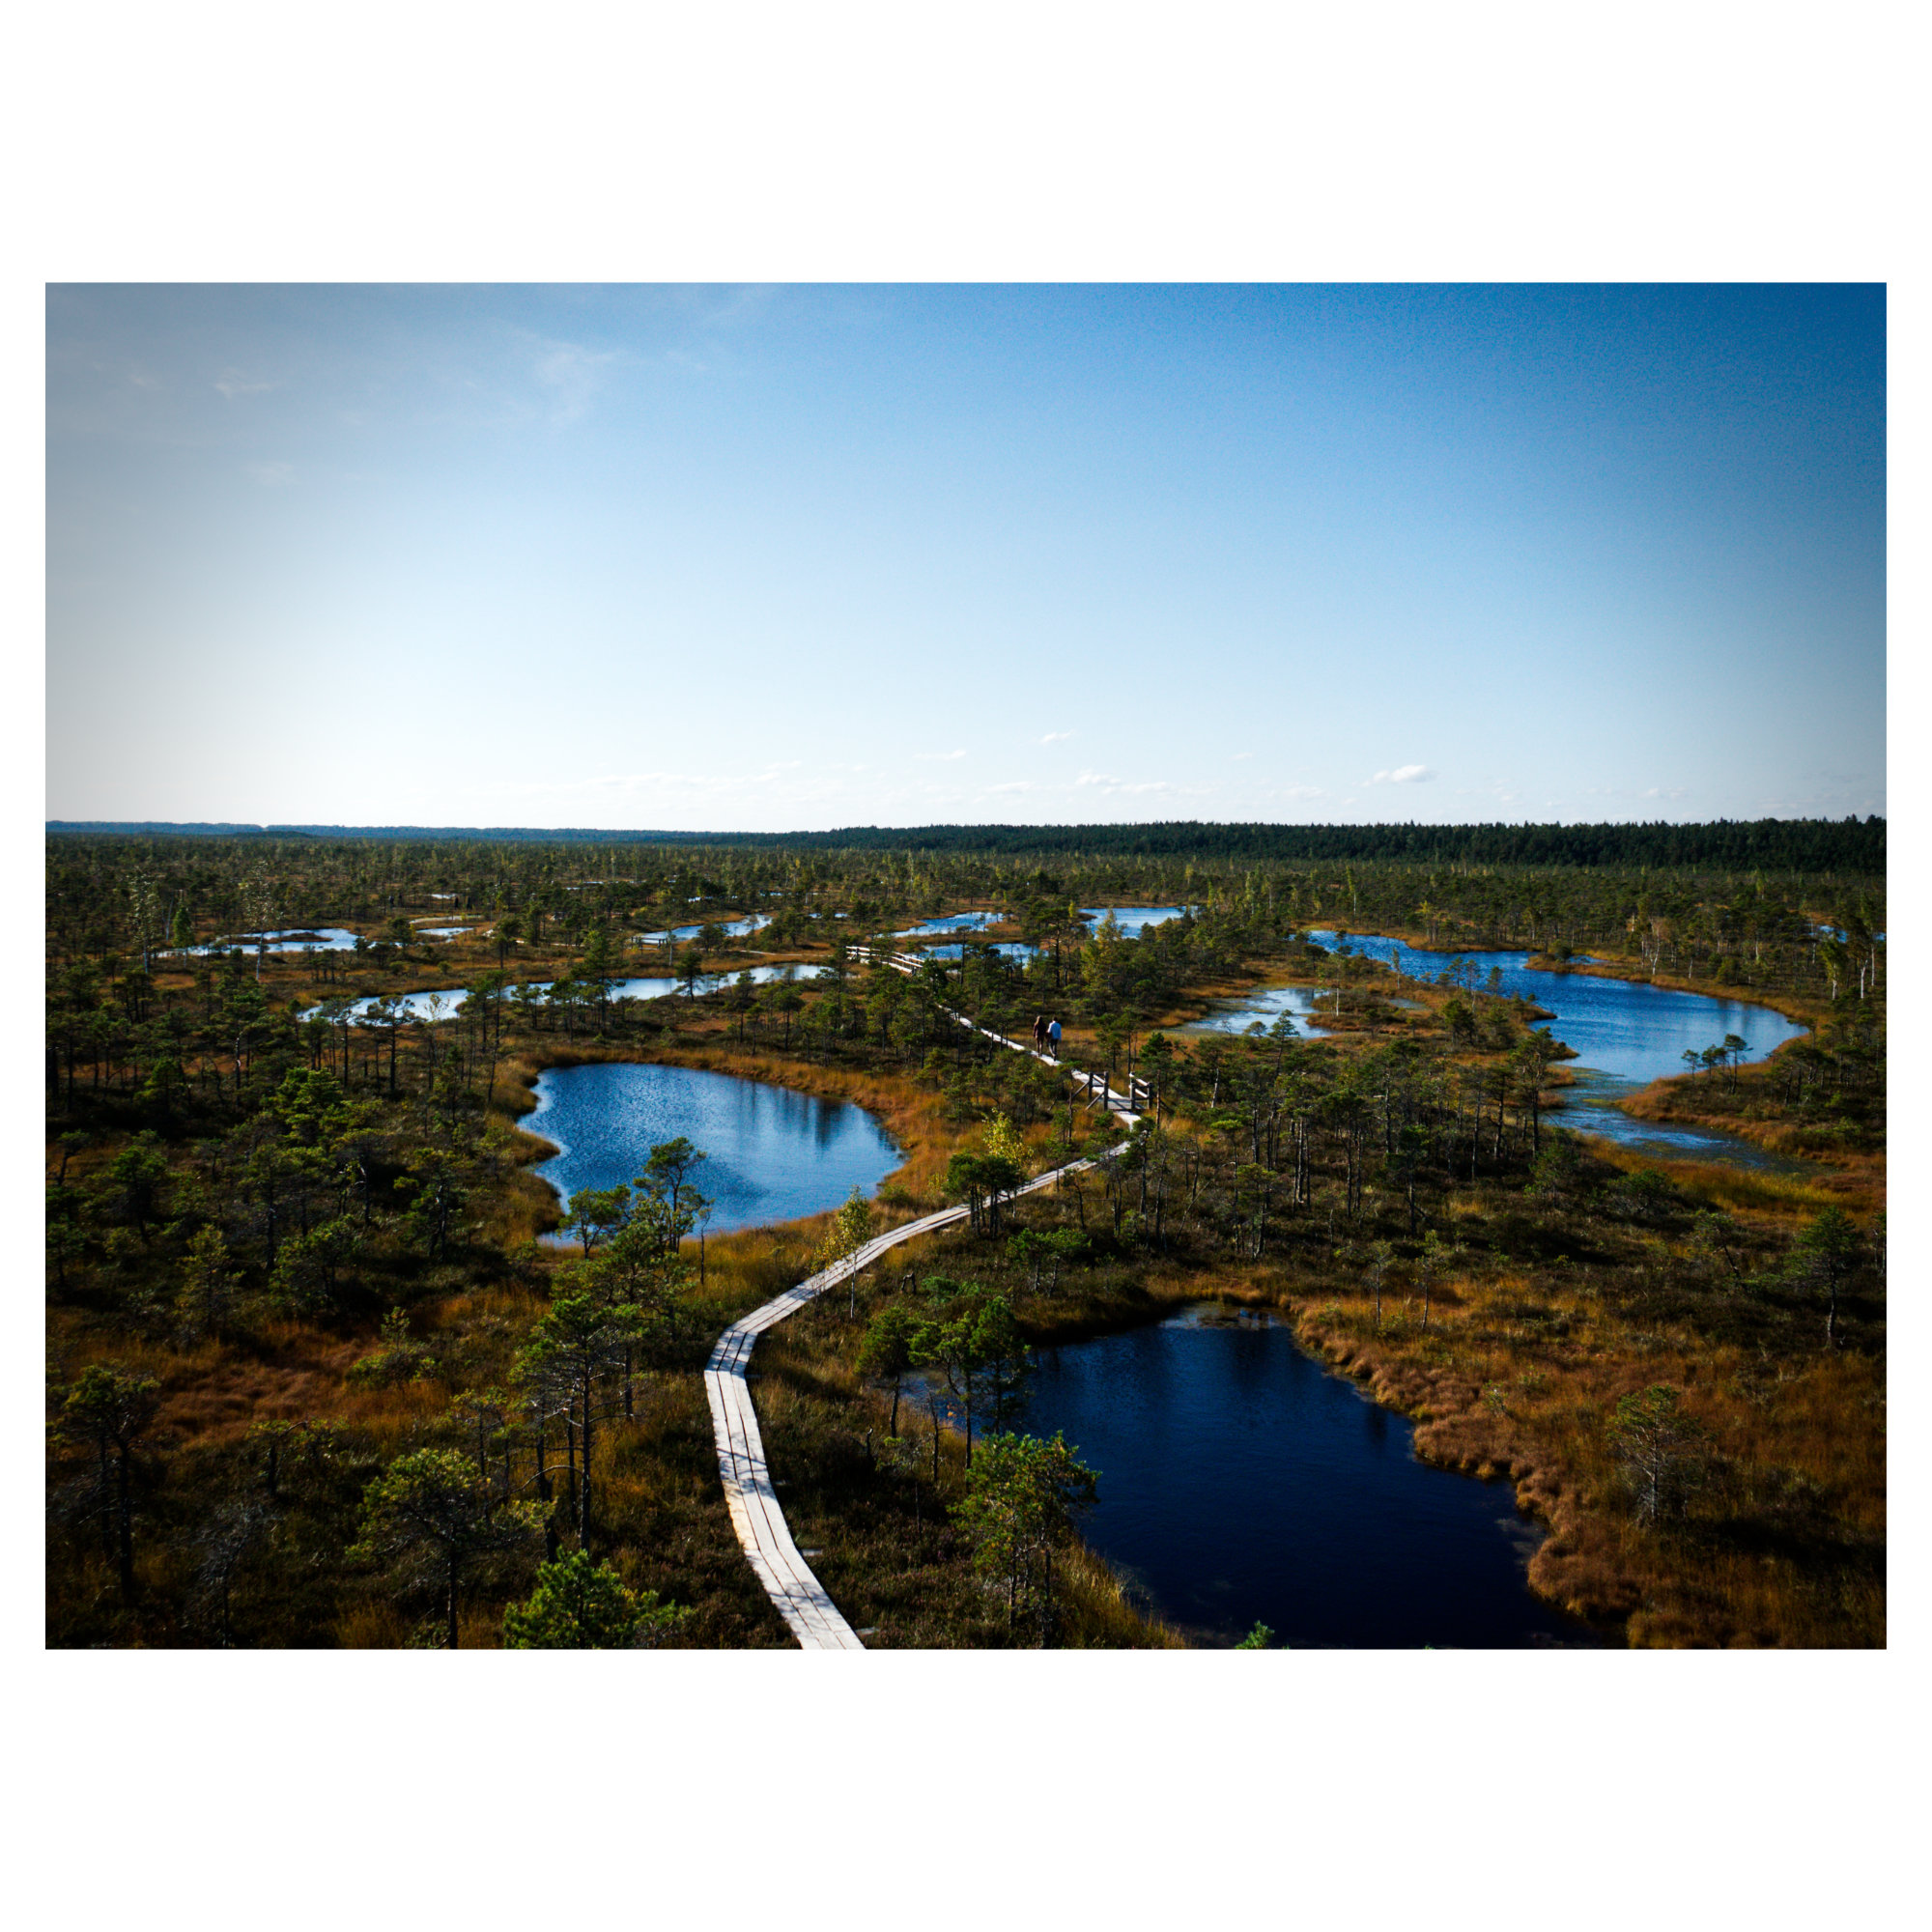 Latvian Swamps